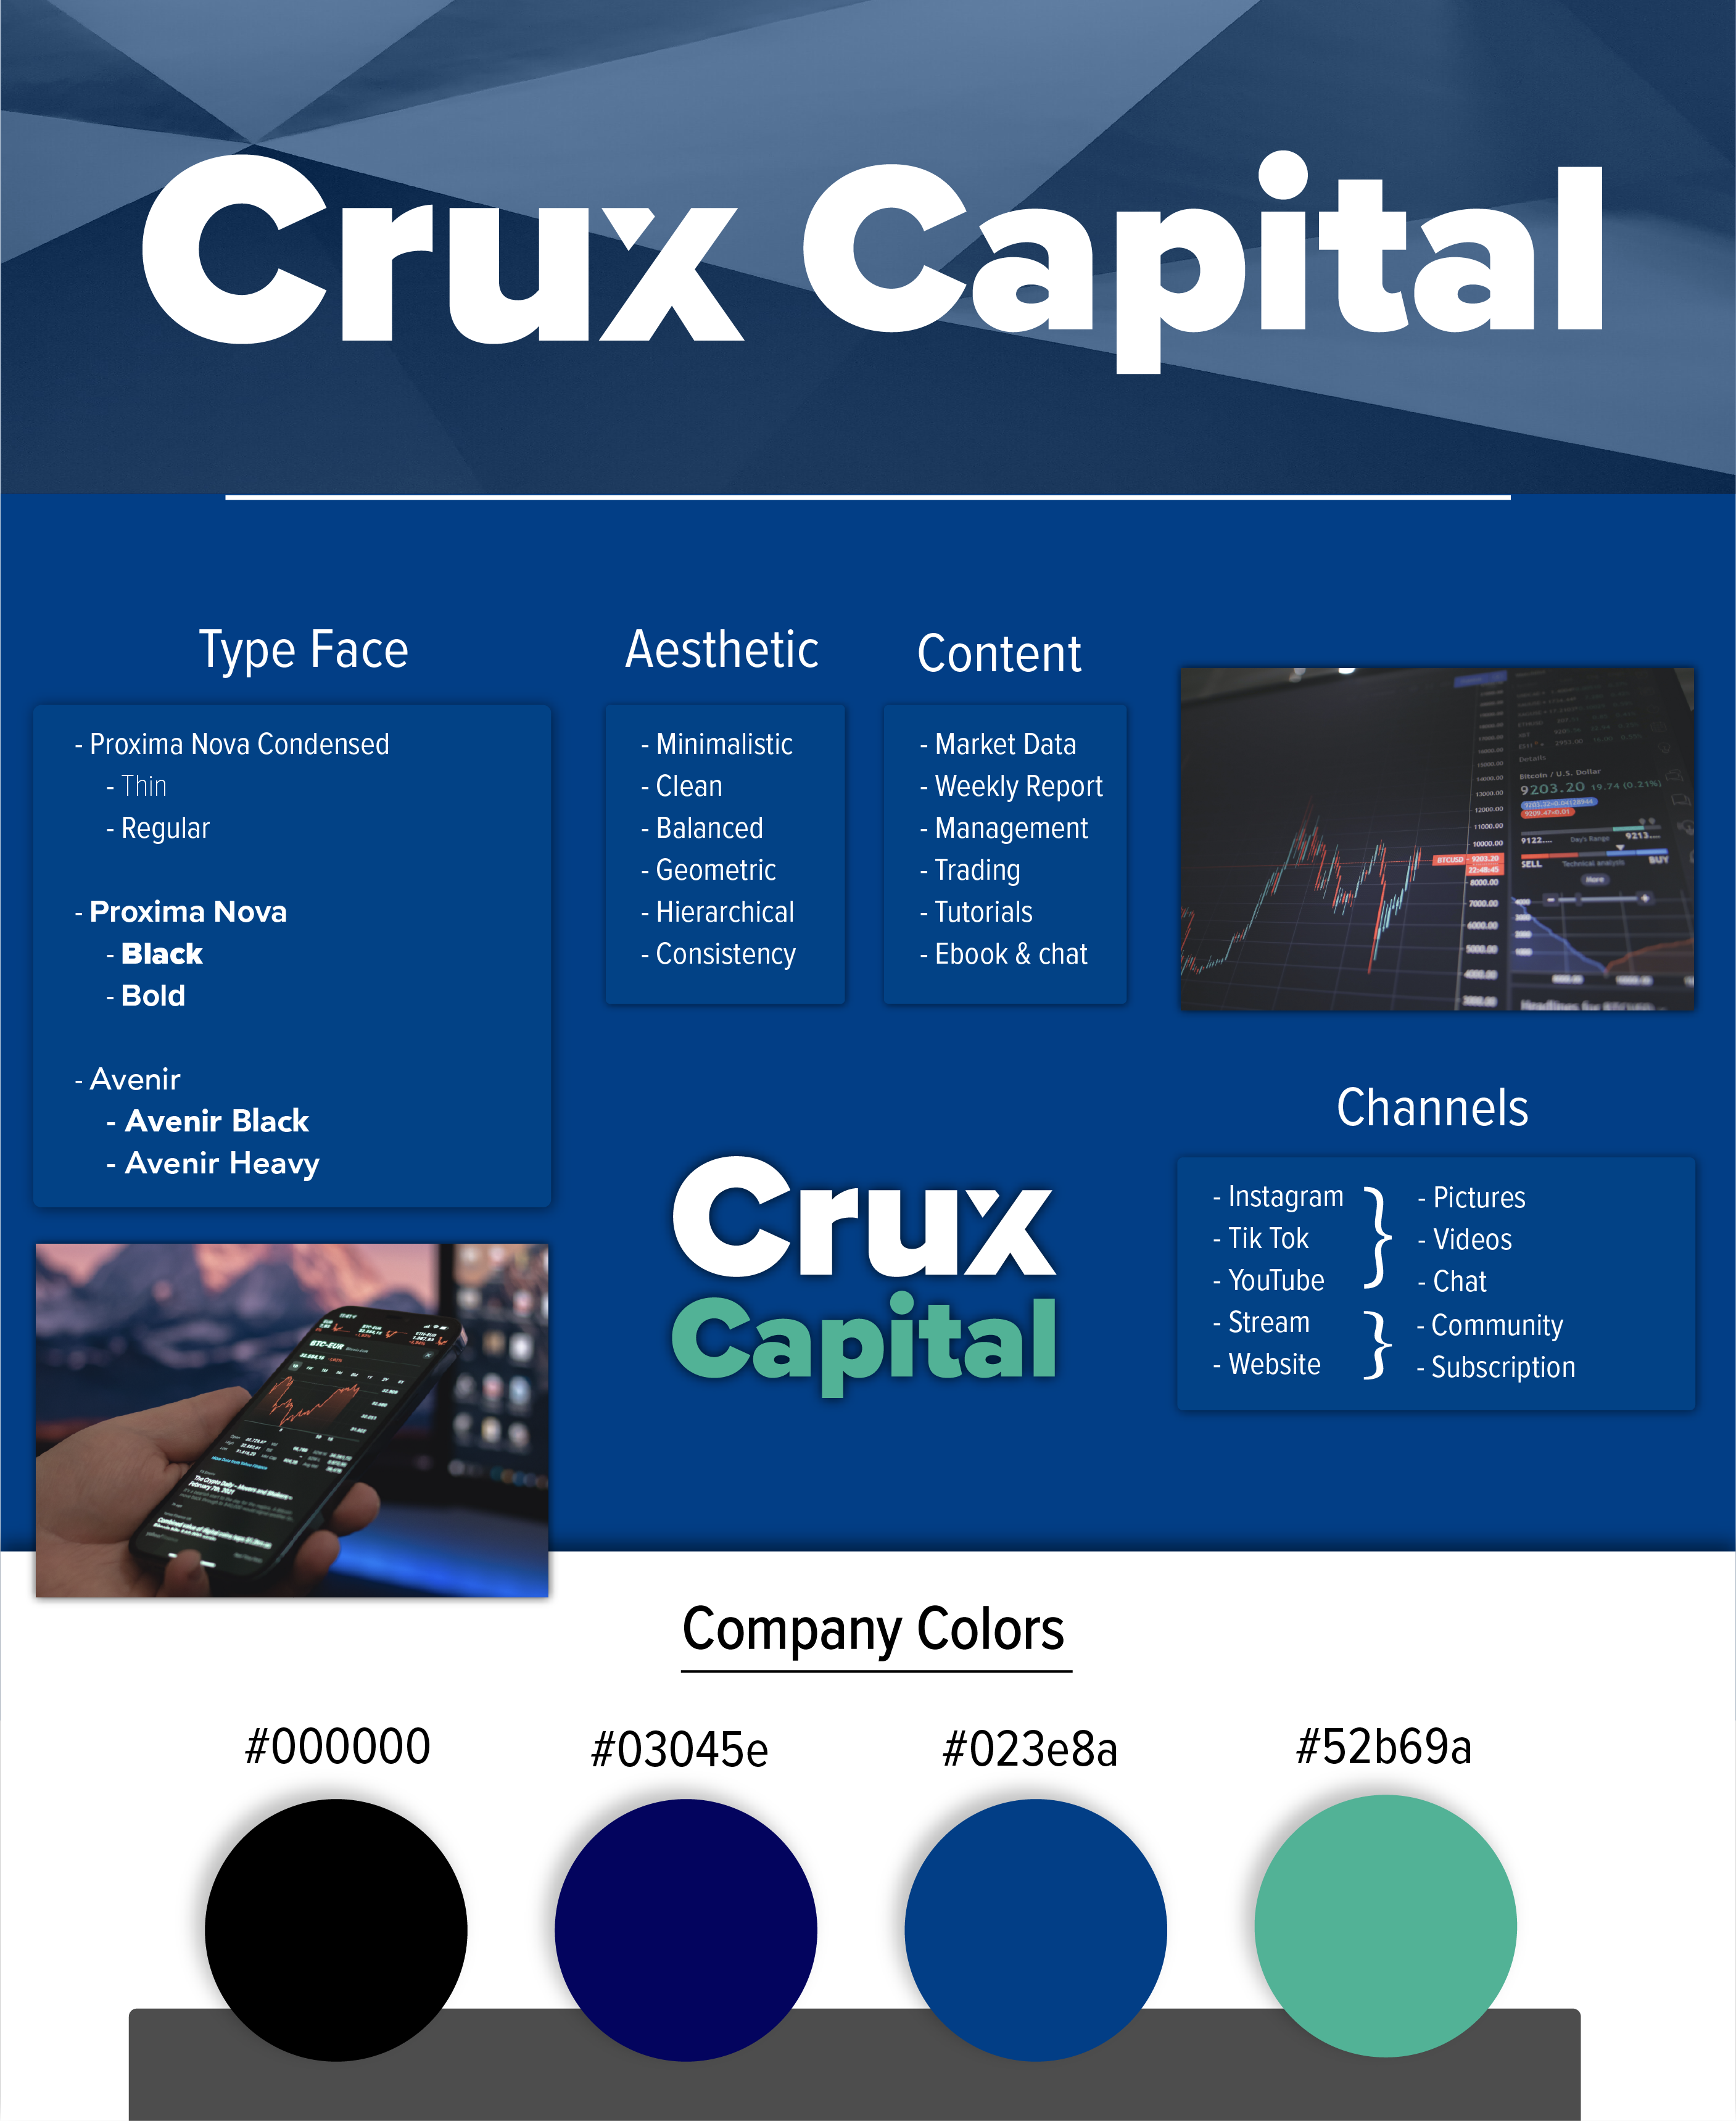 crux capital image